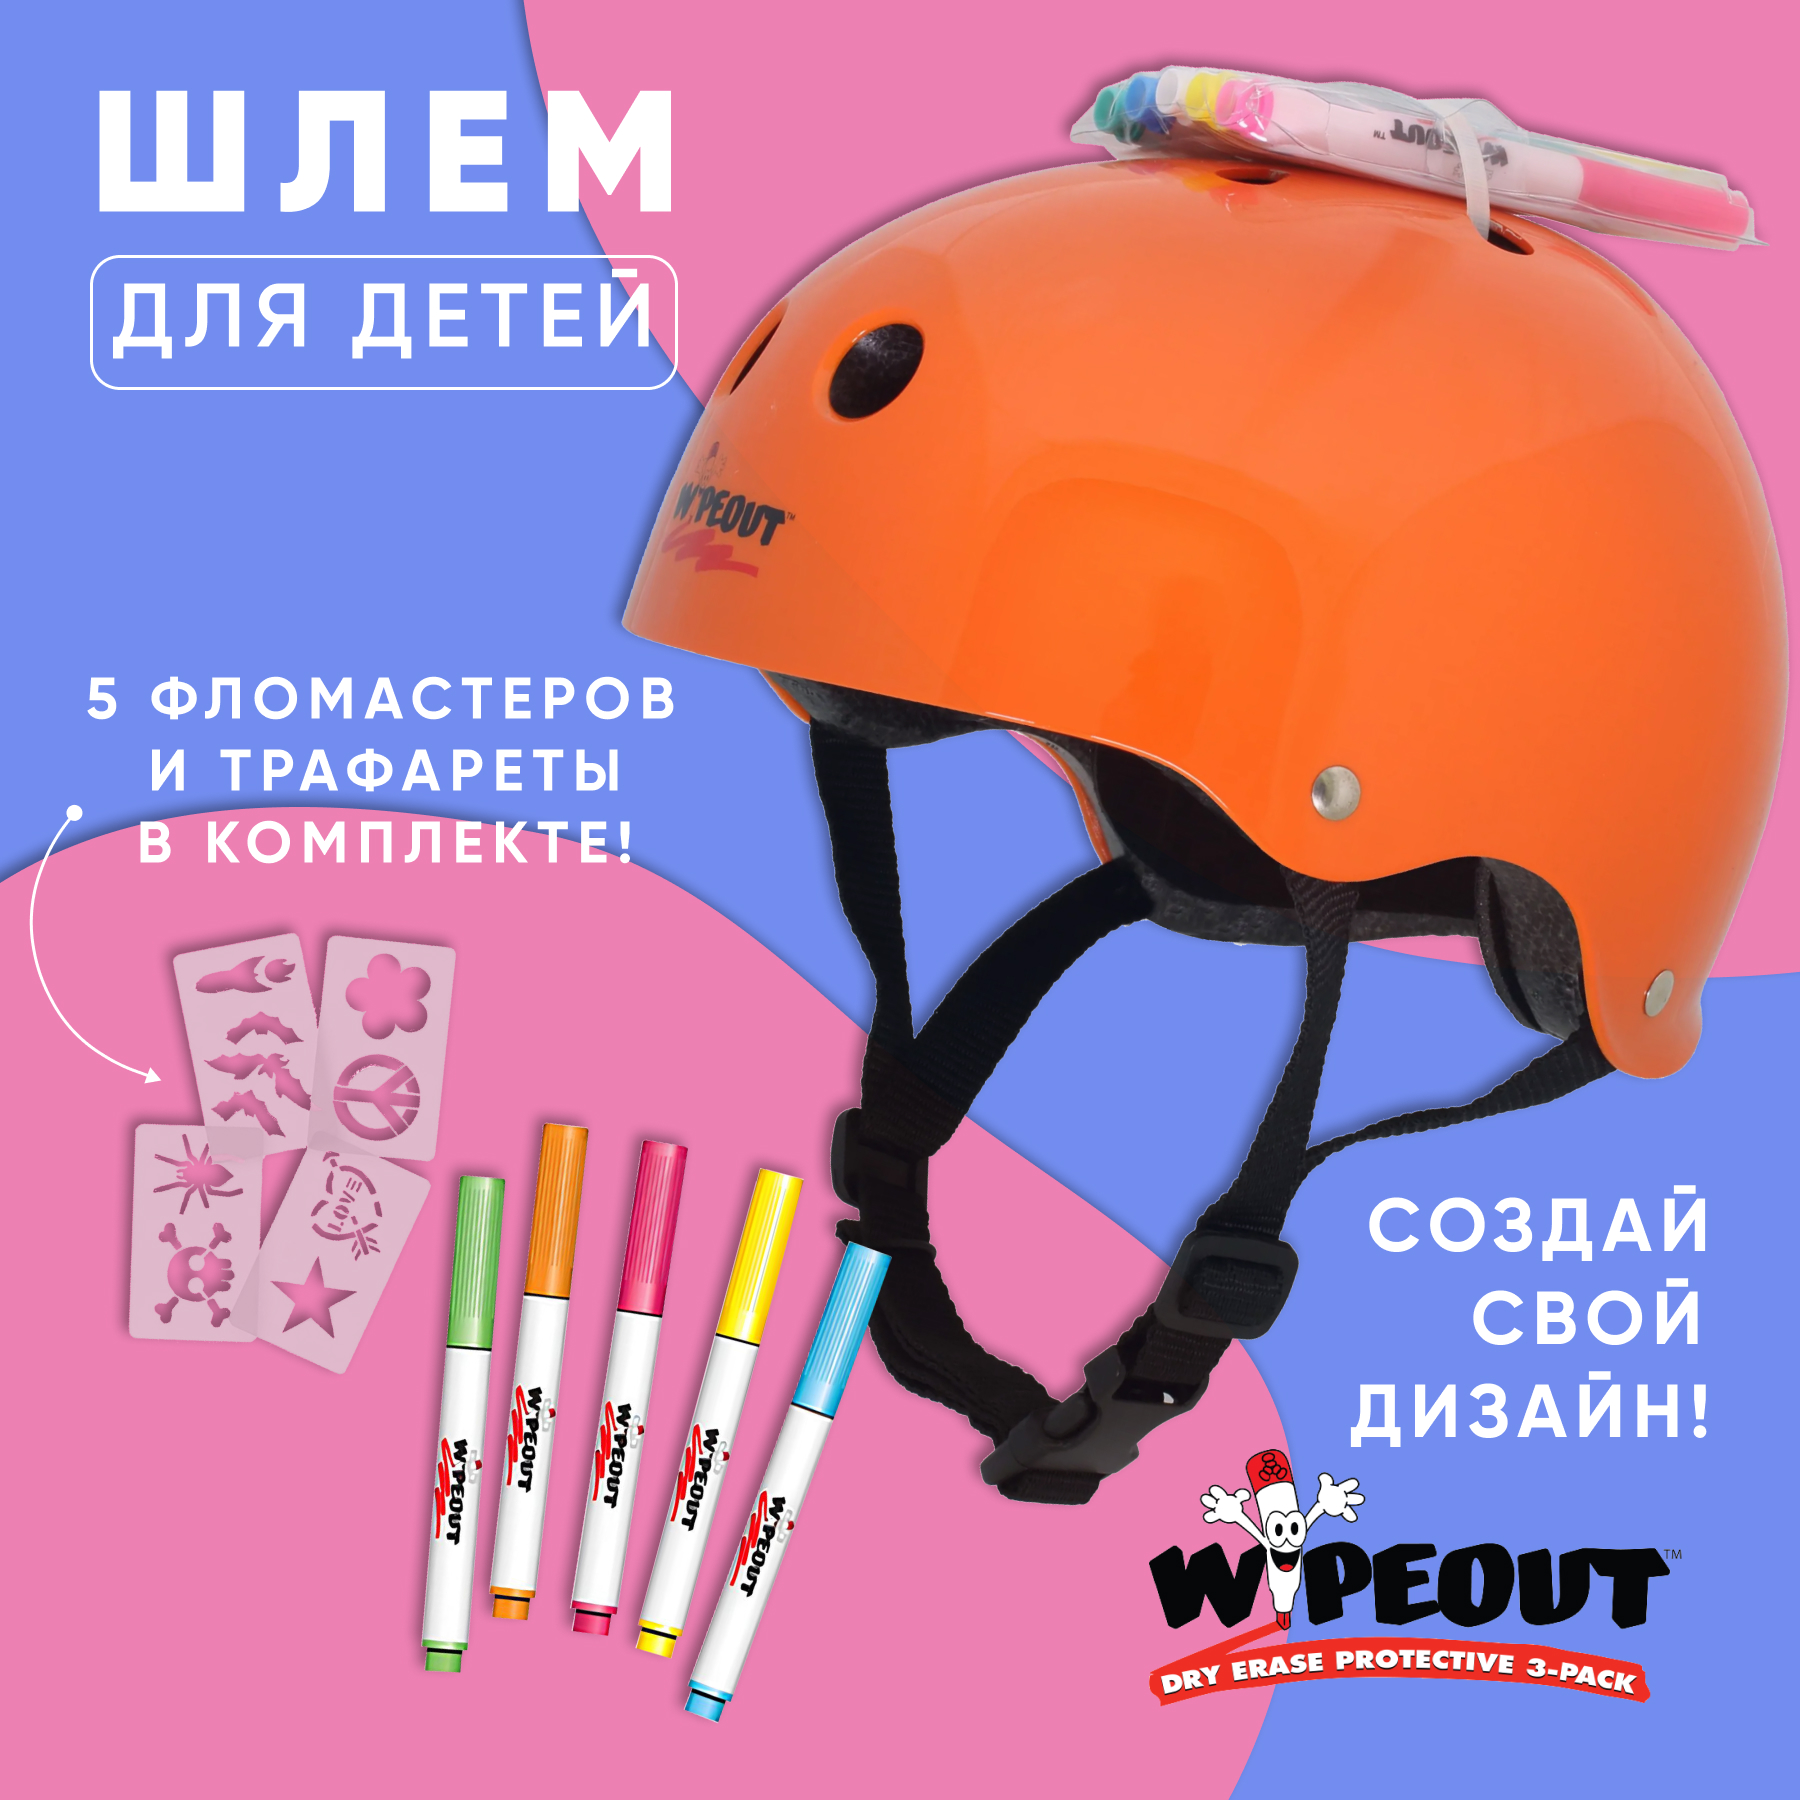 Шлем защитный спортивный WIPEOUT Neon Tangerine с фломастерами и трафаретами размер M 5+ обхват 49-52 см - фото 1